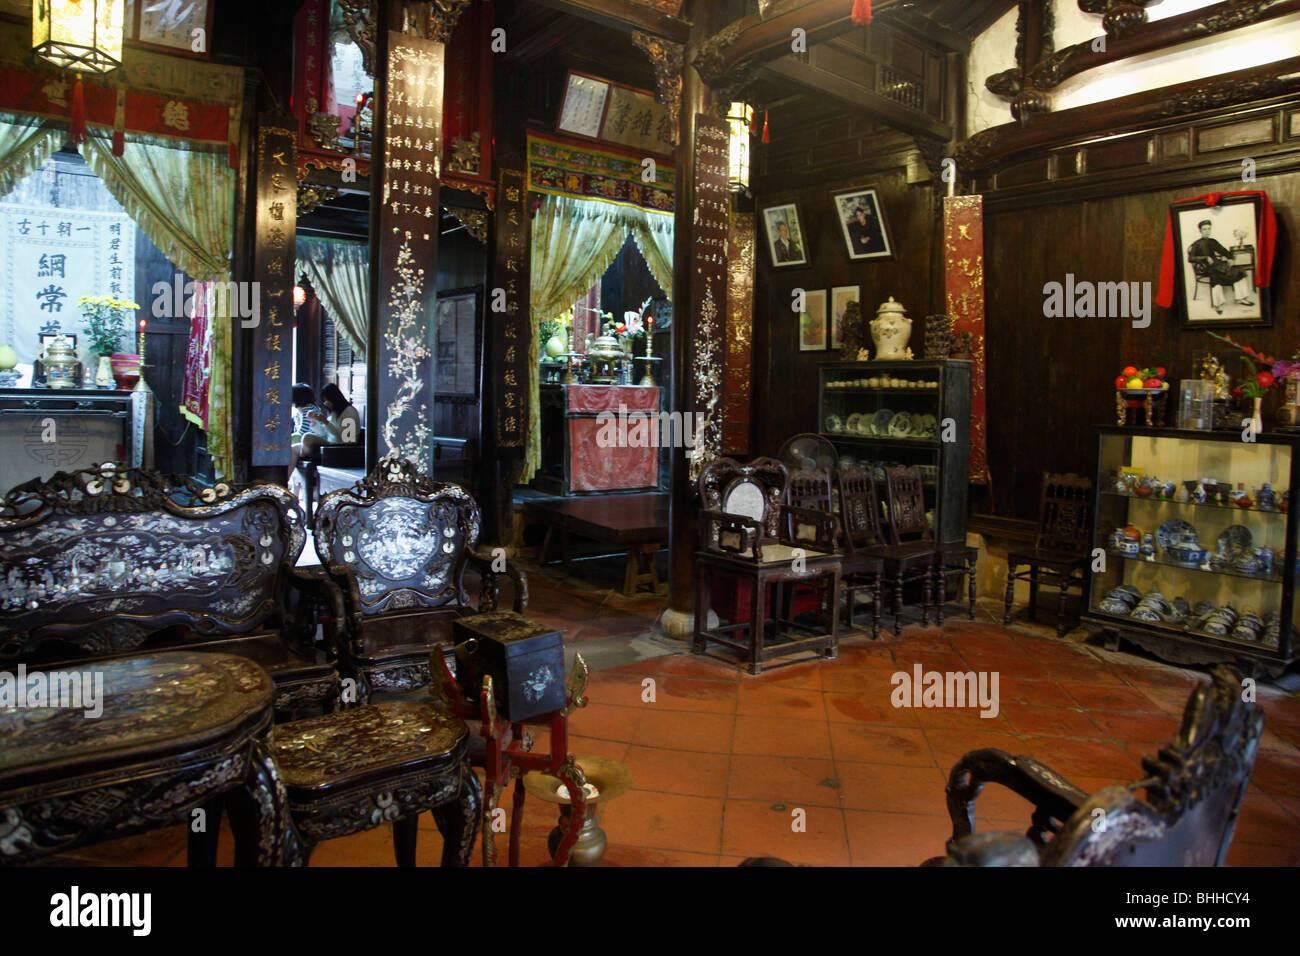 Vietnam, Hoi An, Tan Ky House, interior, Stock Photo